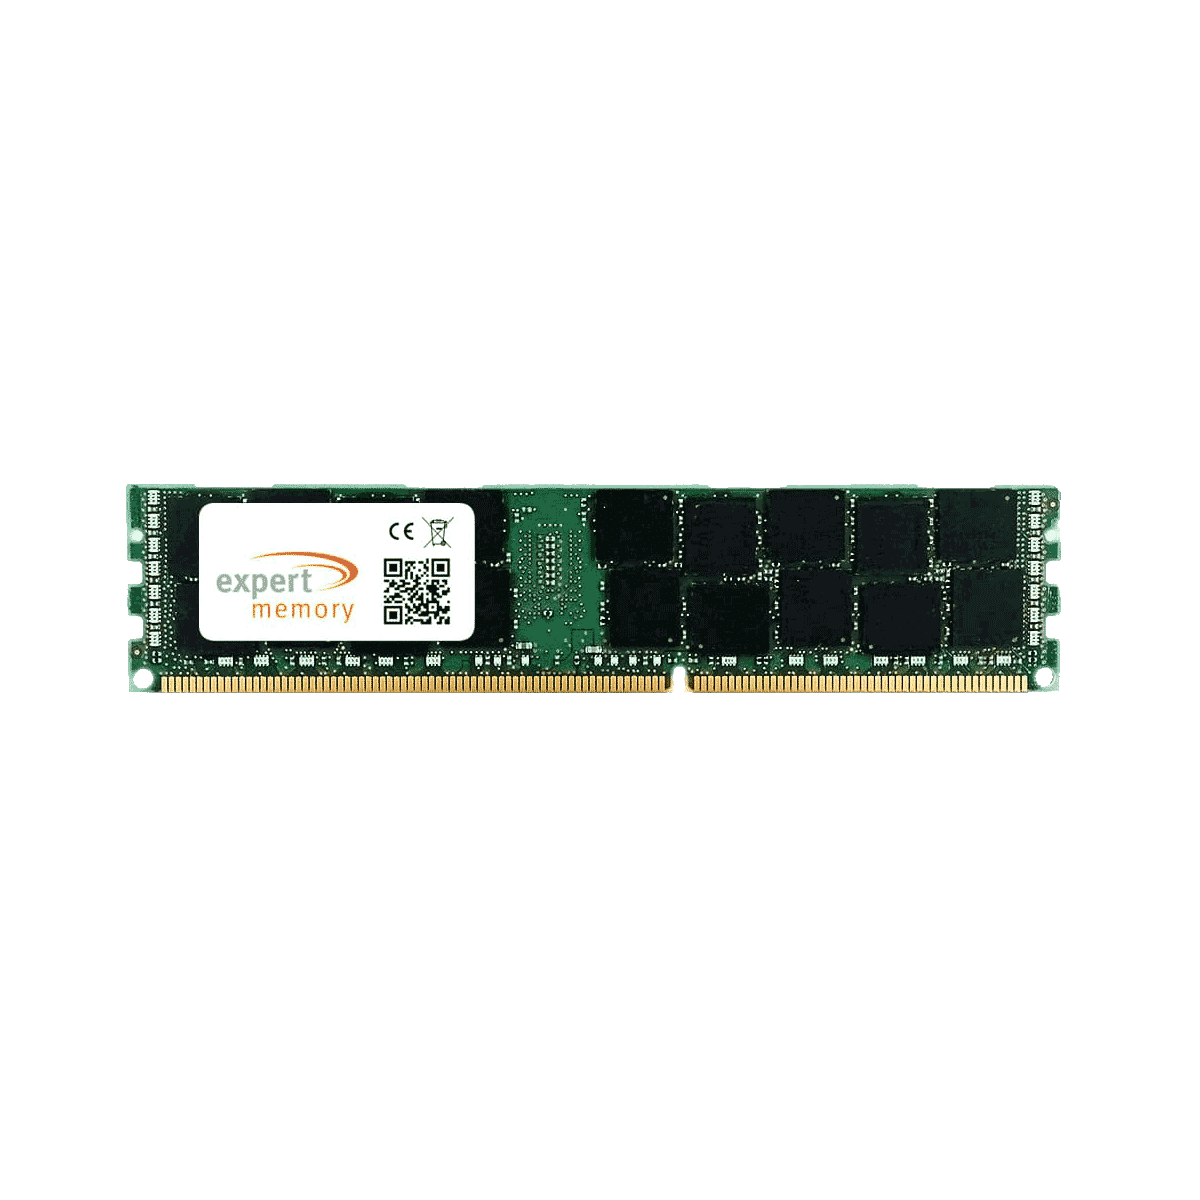 EXPERT MEMORY 32GB RAM Server LRDIMM 4Rx4 Upgrade GB 32 1600 Lenovo Memory TD340 DDR3 ThinkServer